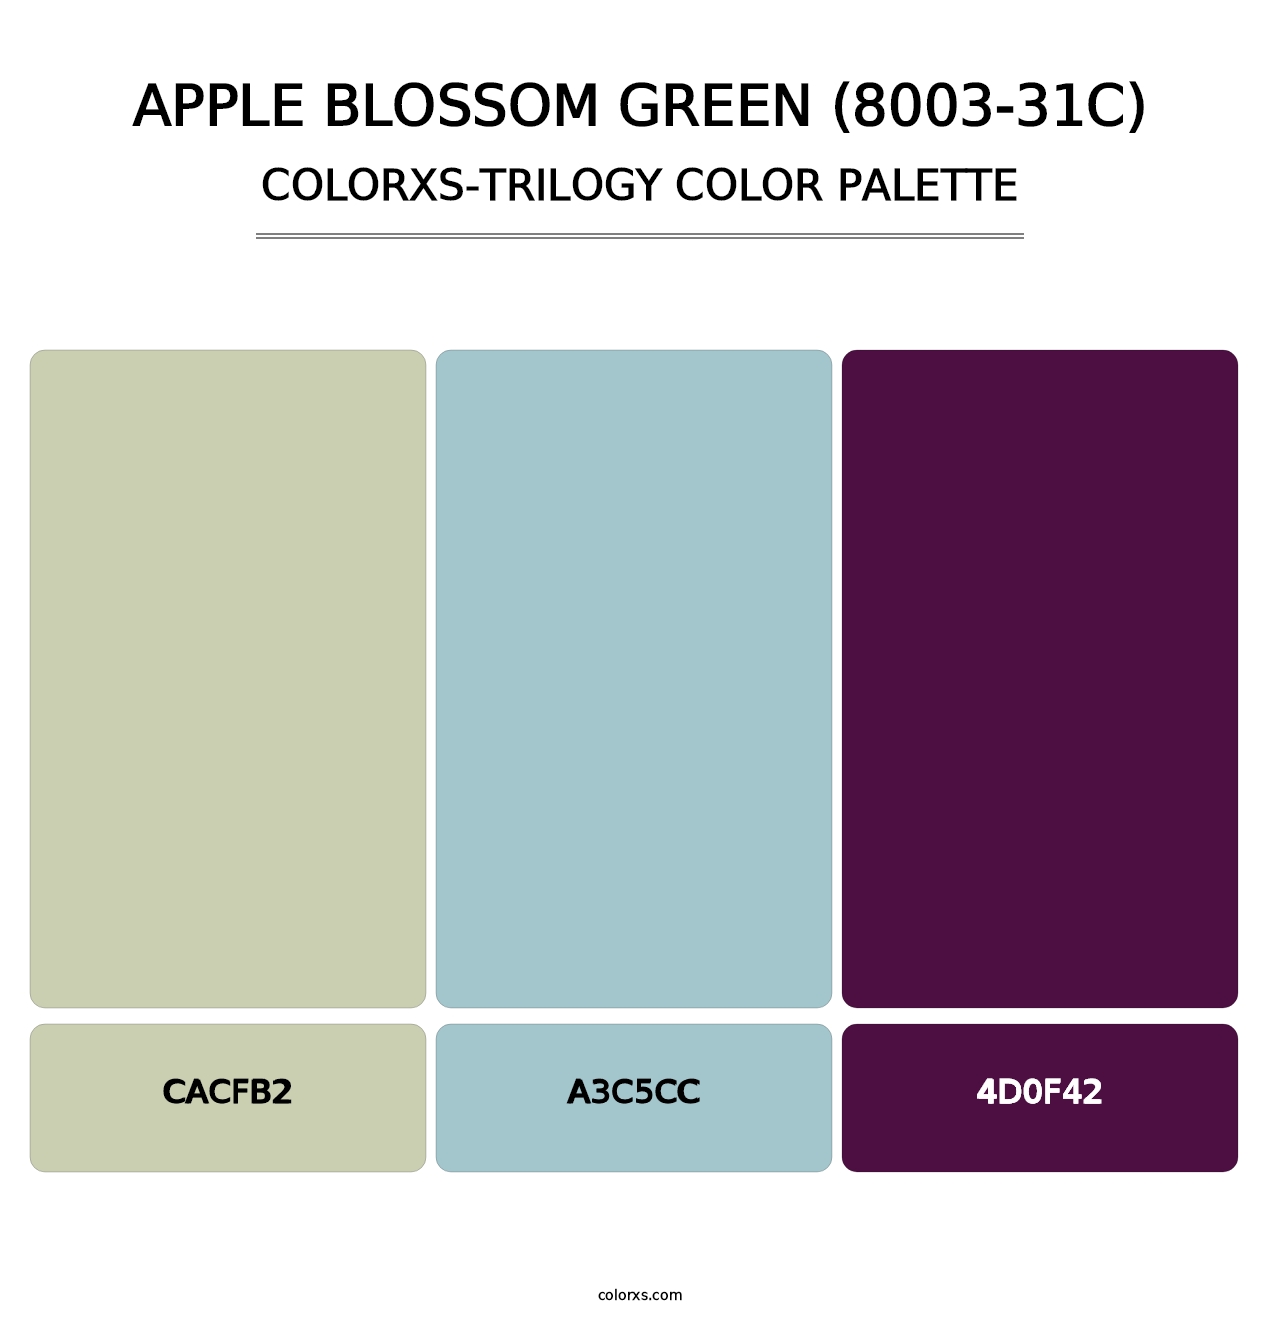 Apple Blossom Green (8003-31C) - Colorxs Trilogy Palette